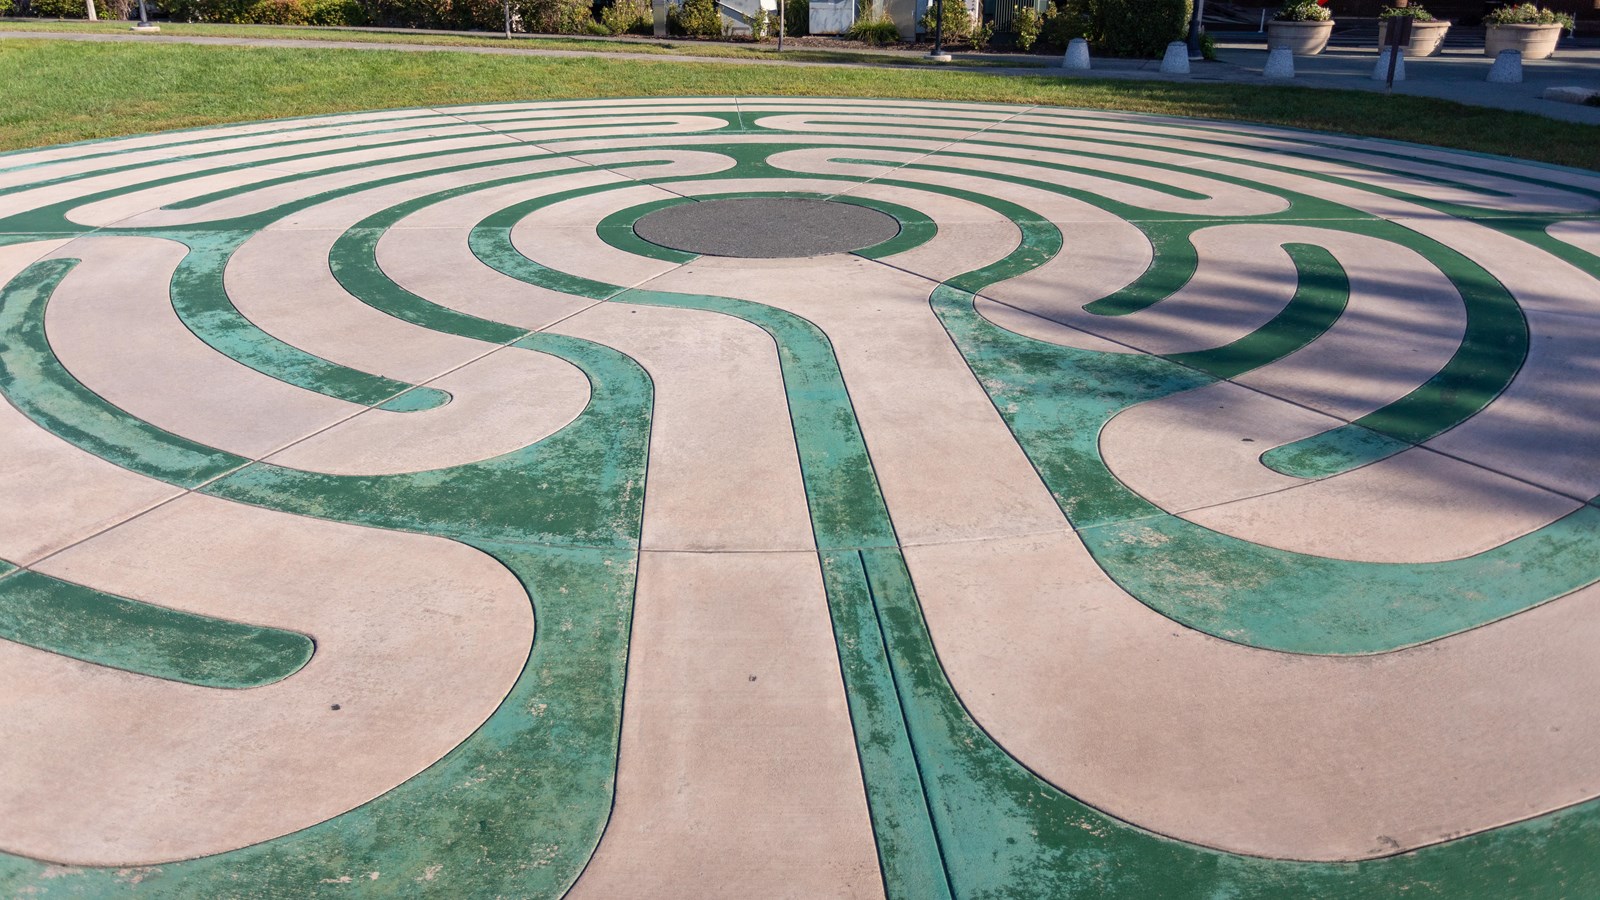 A paved, spiraling maze pattern on a grass lawn.